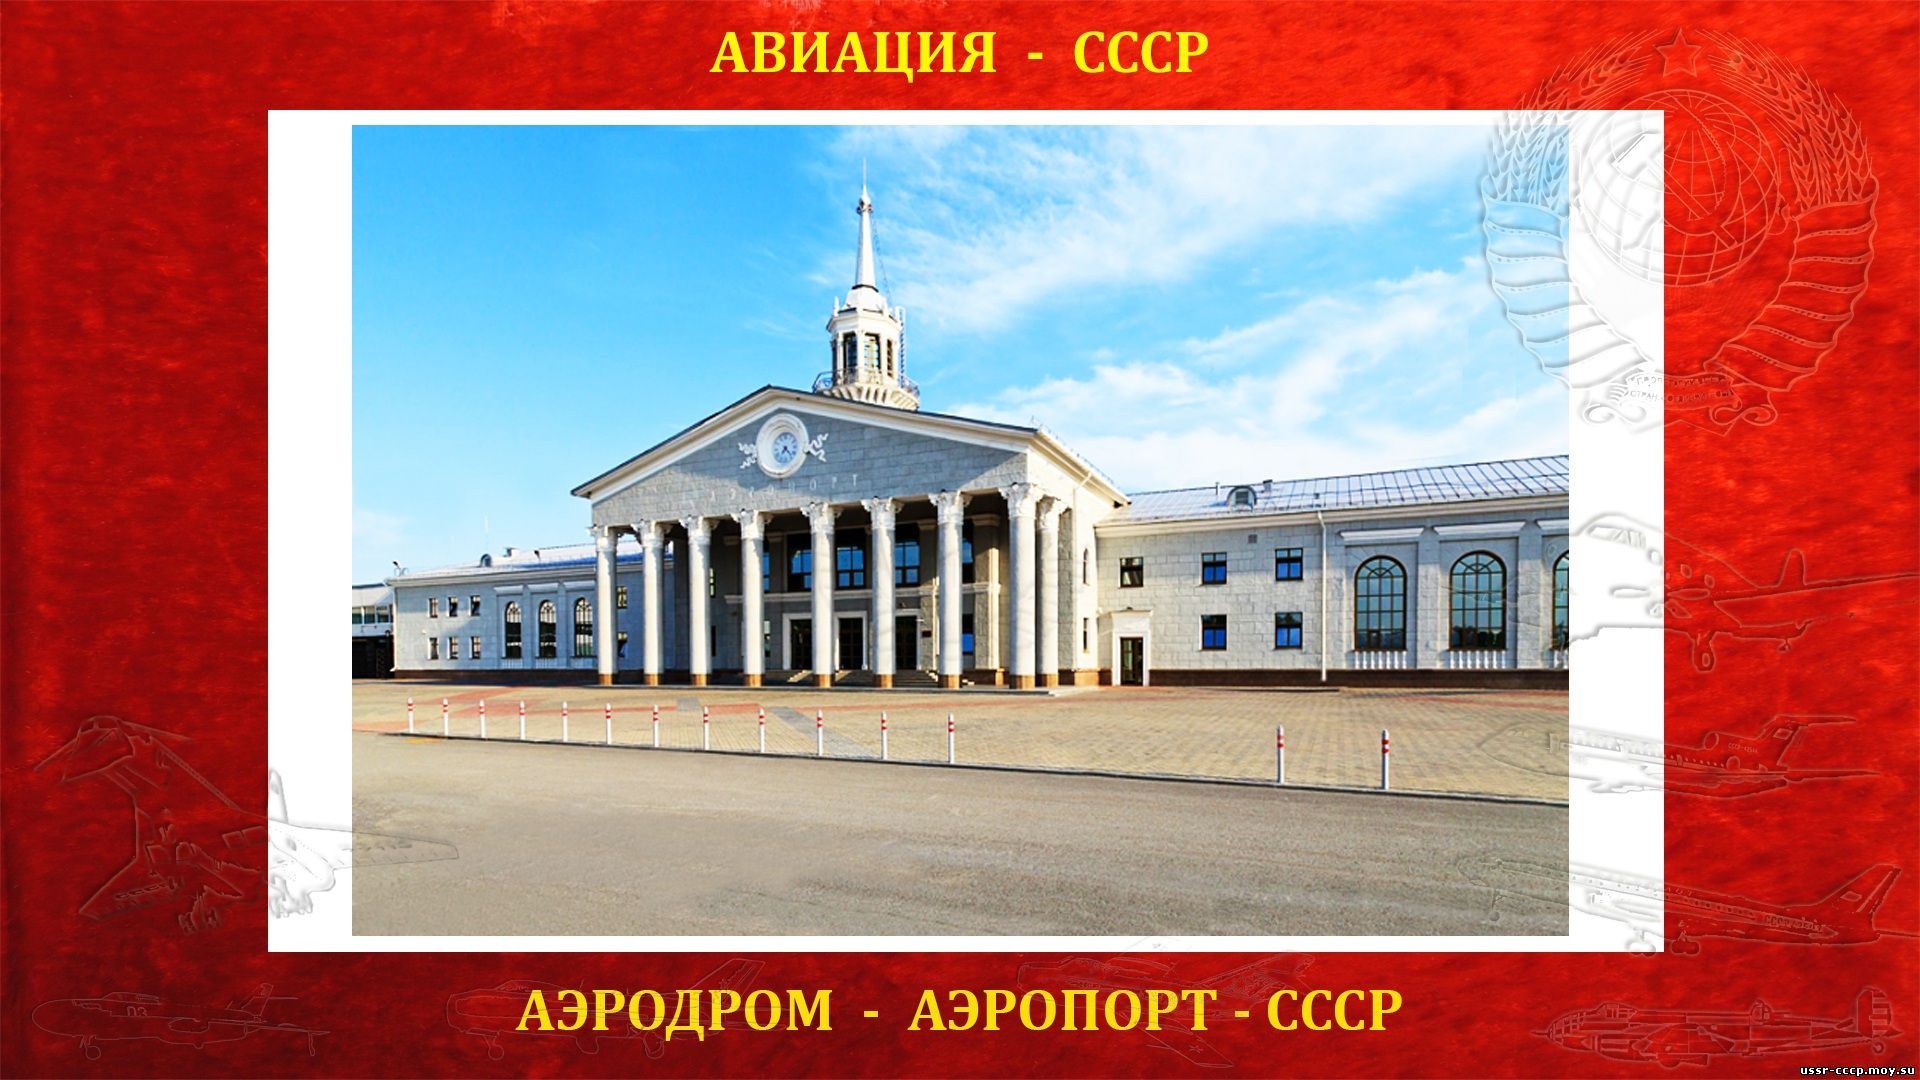 Кольцово — Аэродром (Аэропорт) СССР (повествование)